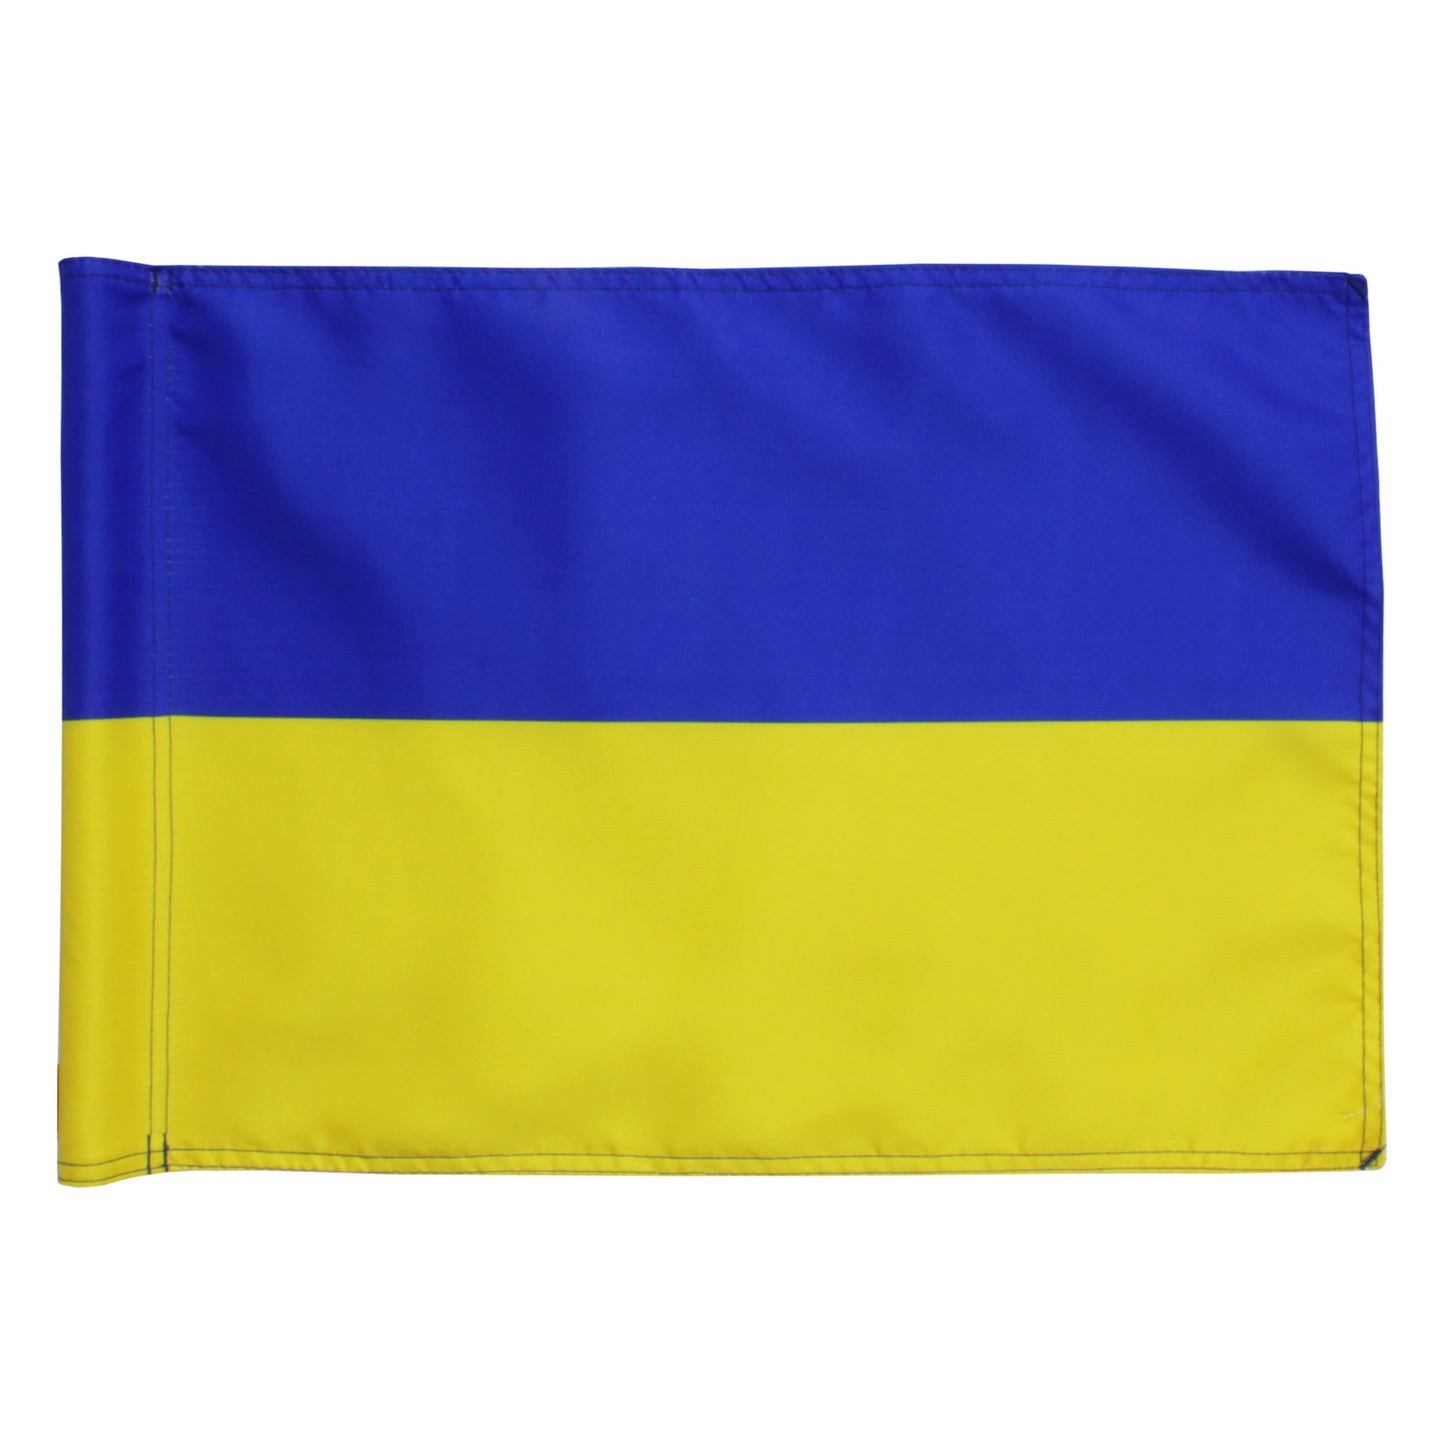 NEW! Regulation Ukrainian Flag - 14"x20"